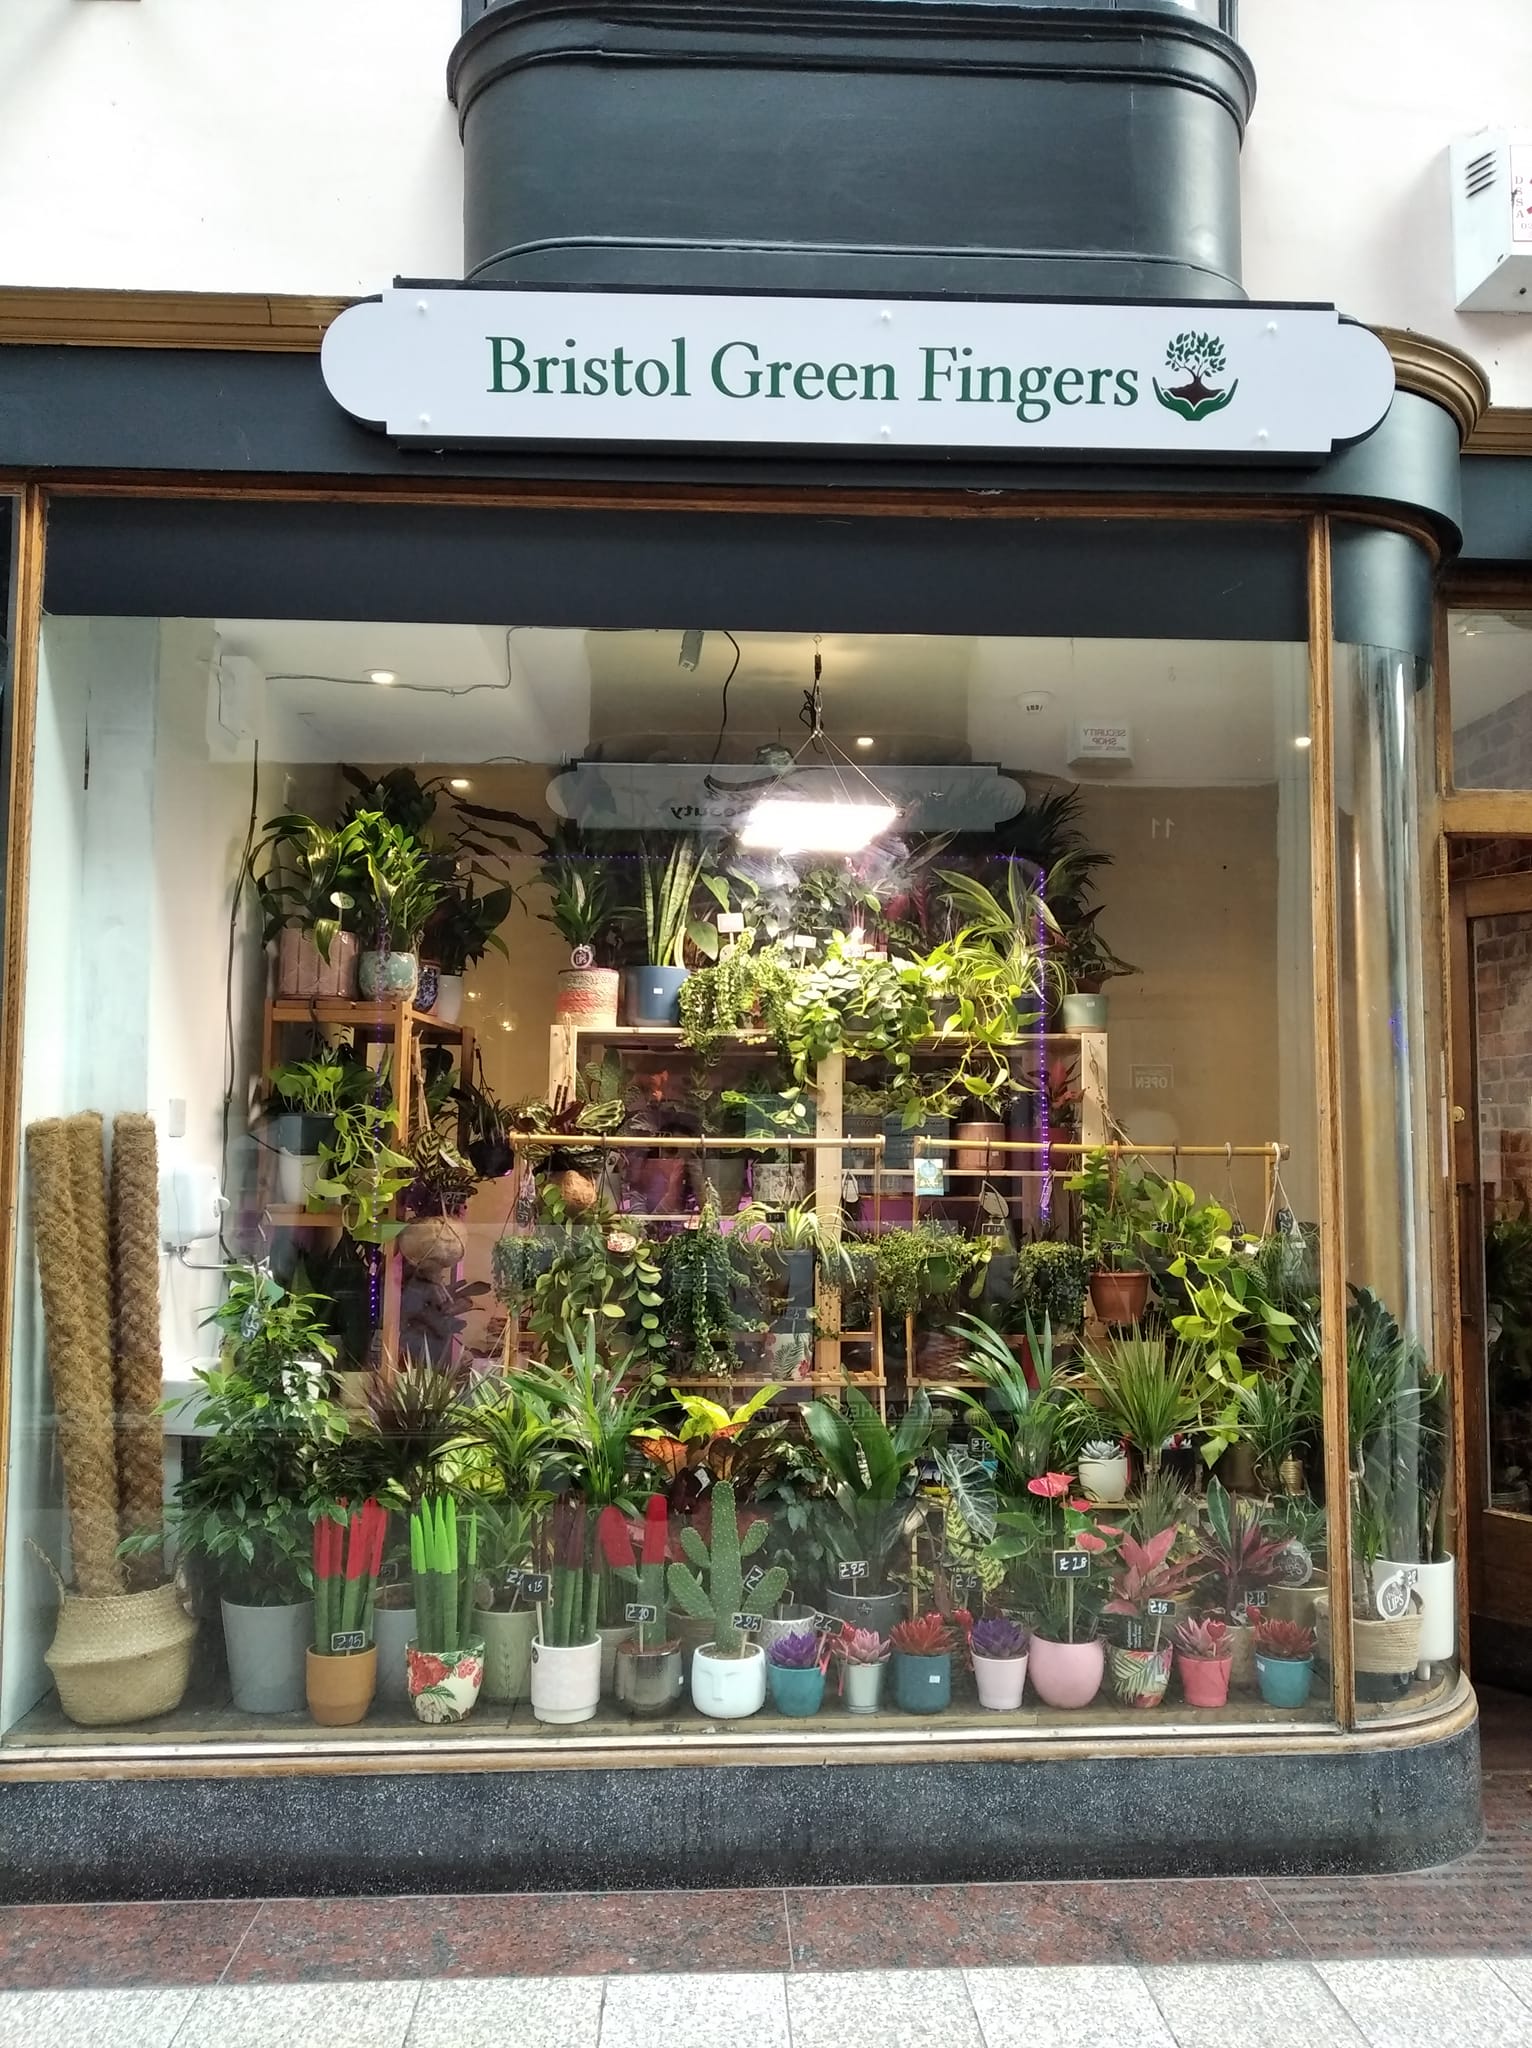 Bristol Green Fingers